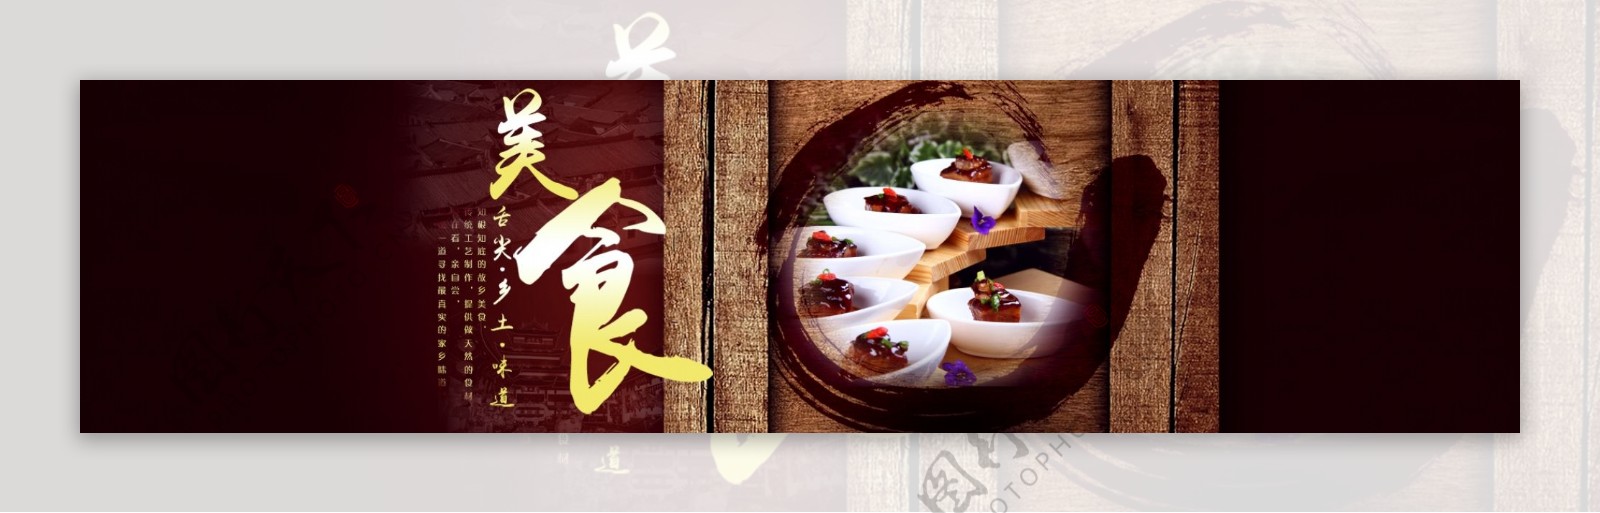 传统古典美食banner